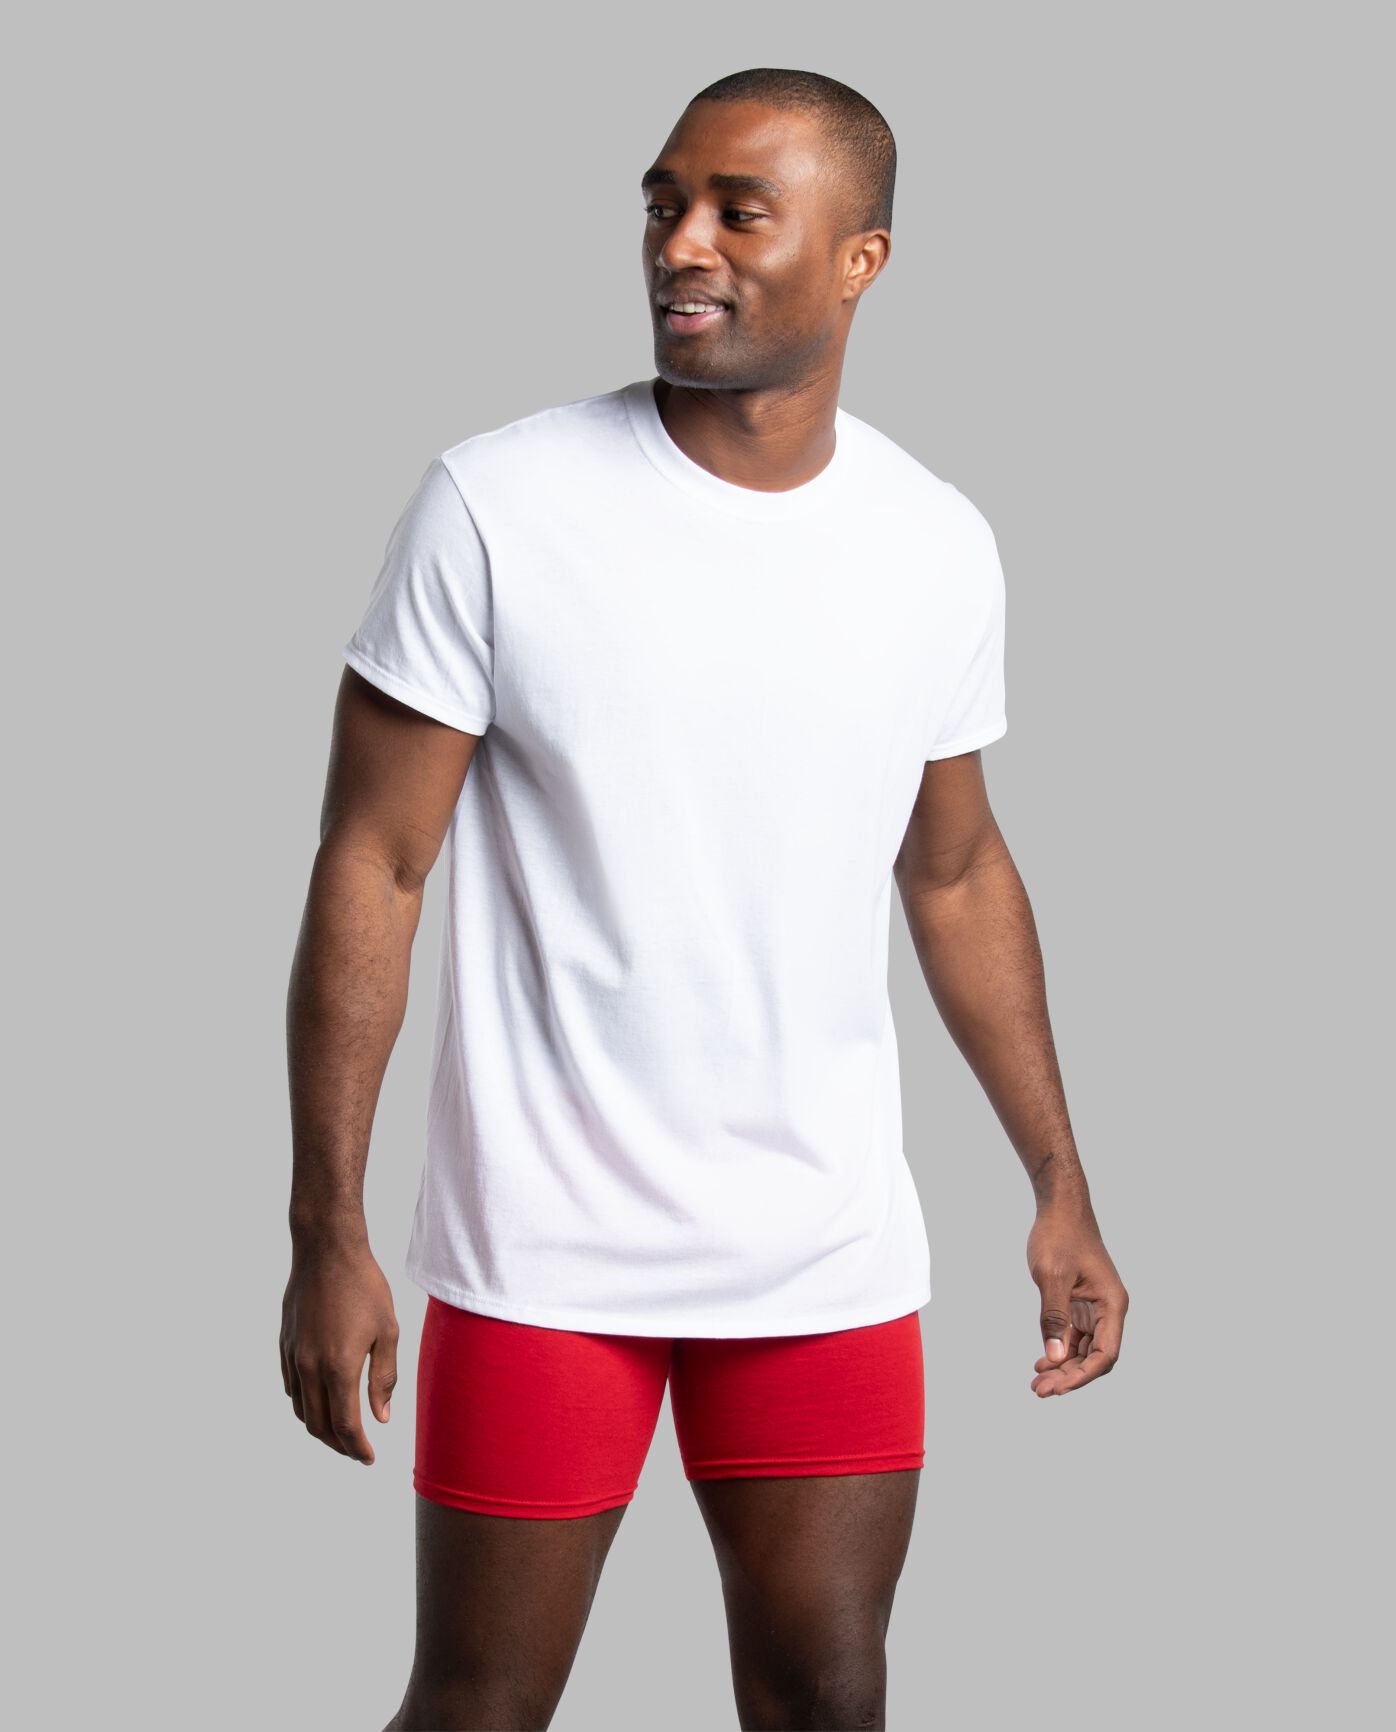 overholdelse Terapi golf Men's Short Sleeve Active Cotton Blend White Crew T-Shirts